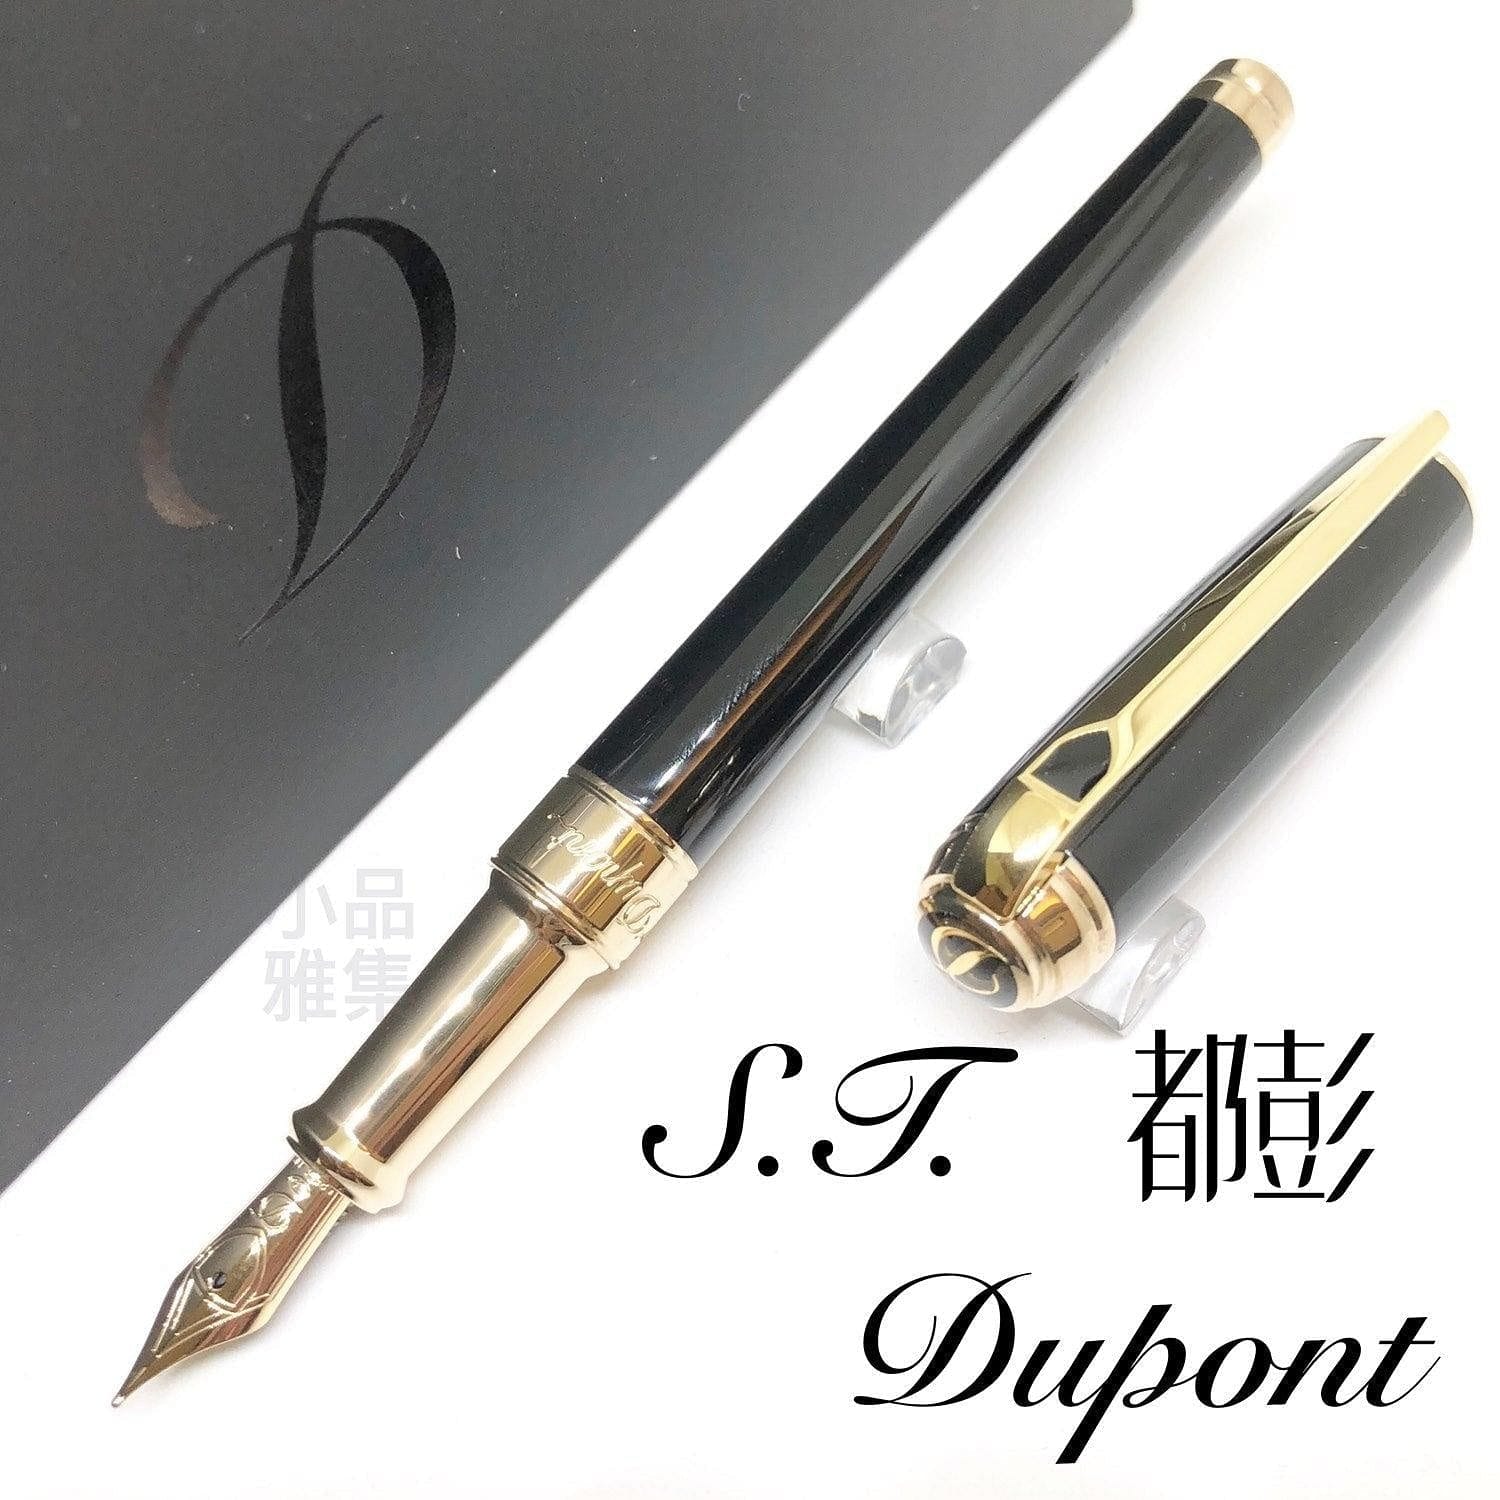 S.T. Dupont D-Line Medium Pearl White/ Gold Fountain Pen